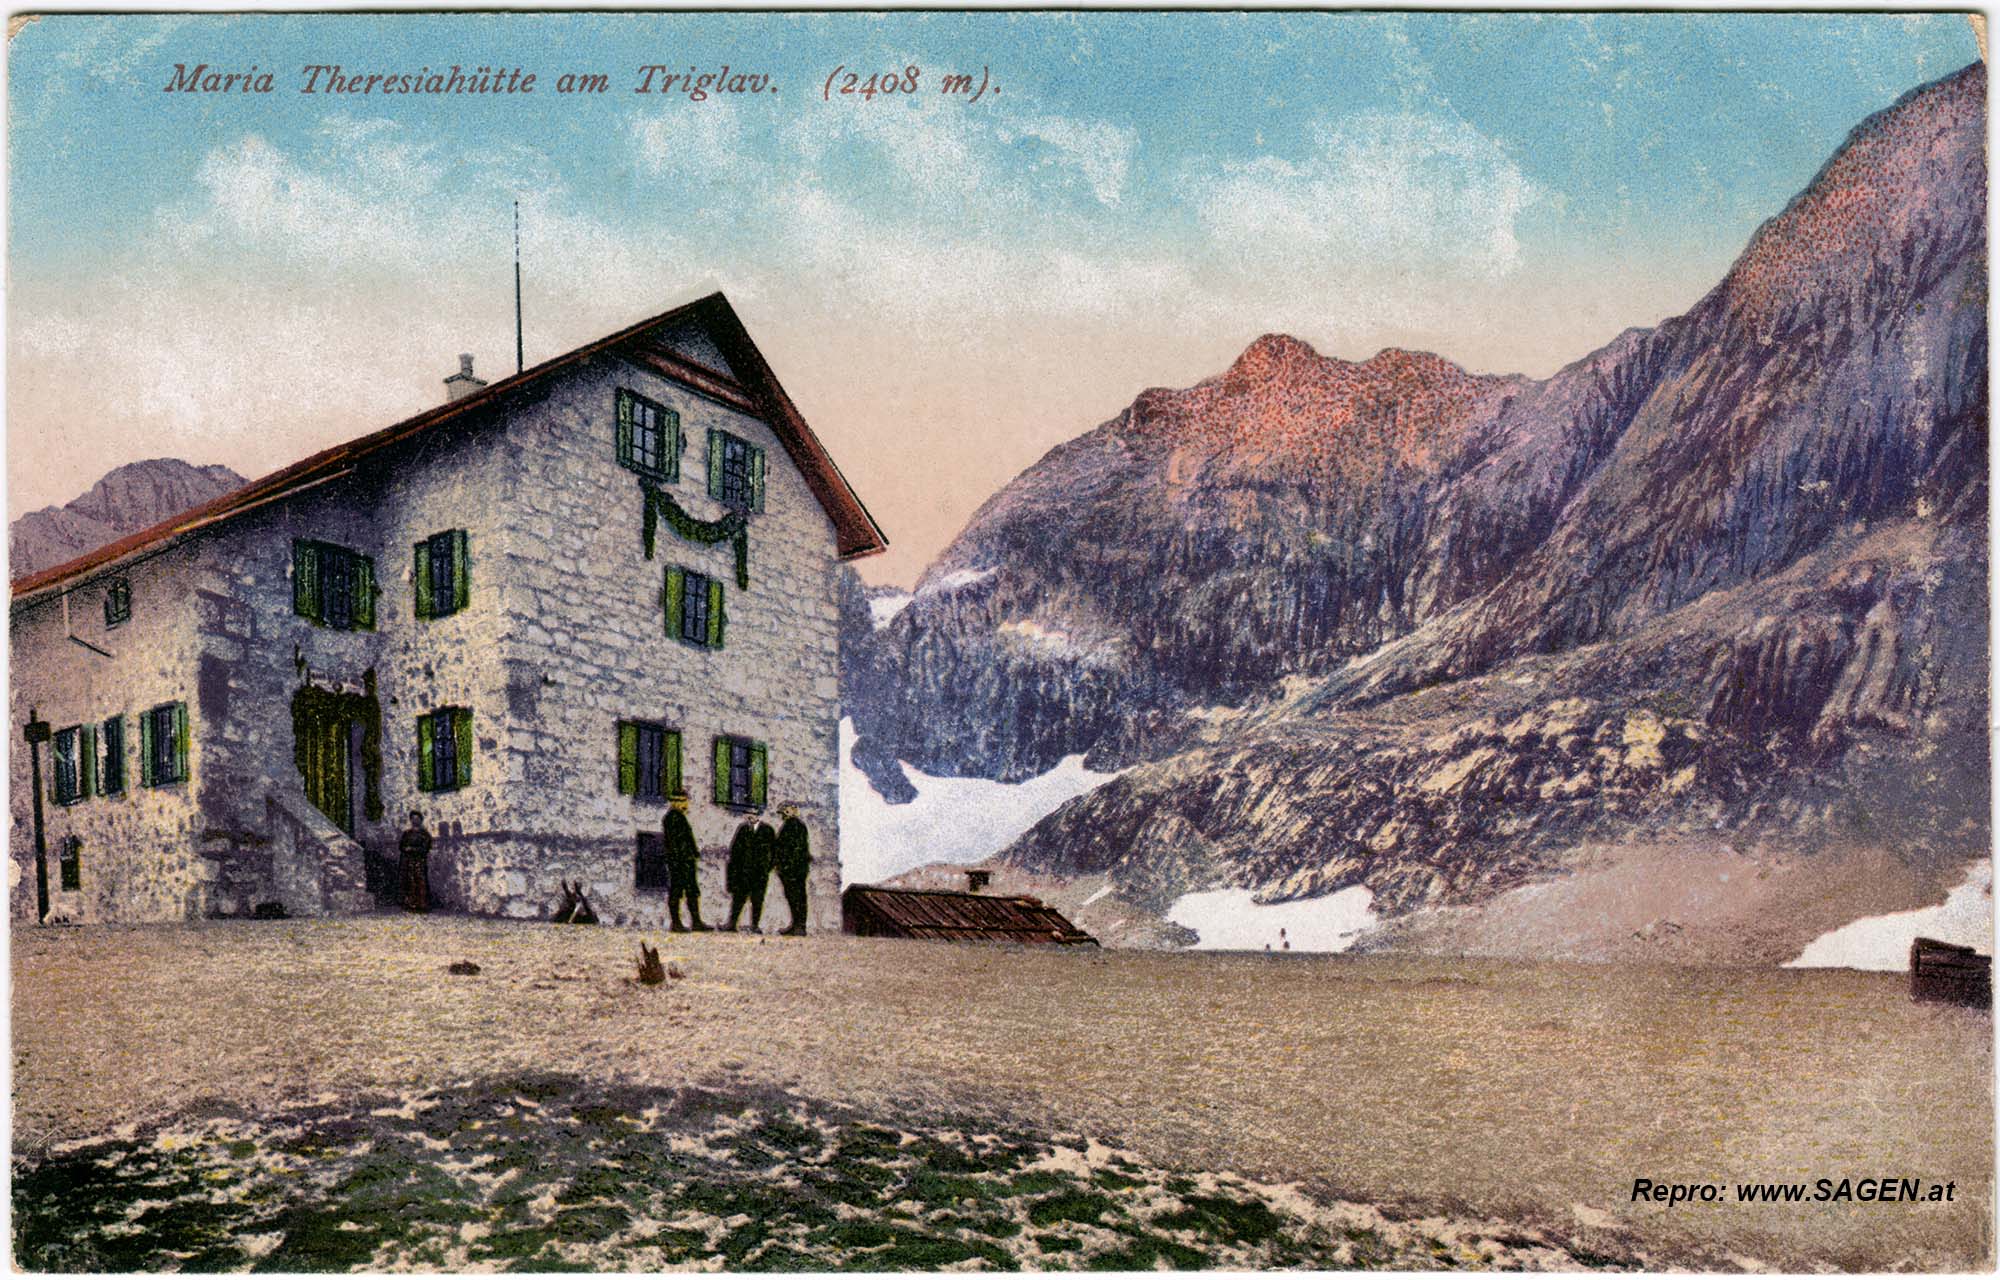 Maria Theresia-Hütte am Triglav (2408 m)